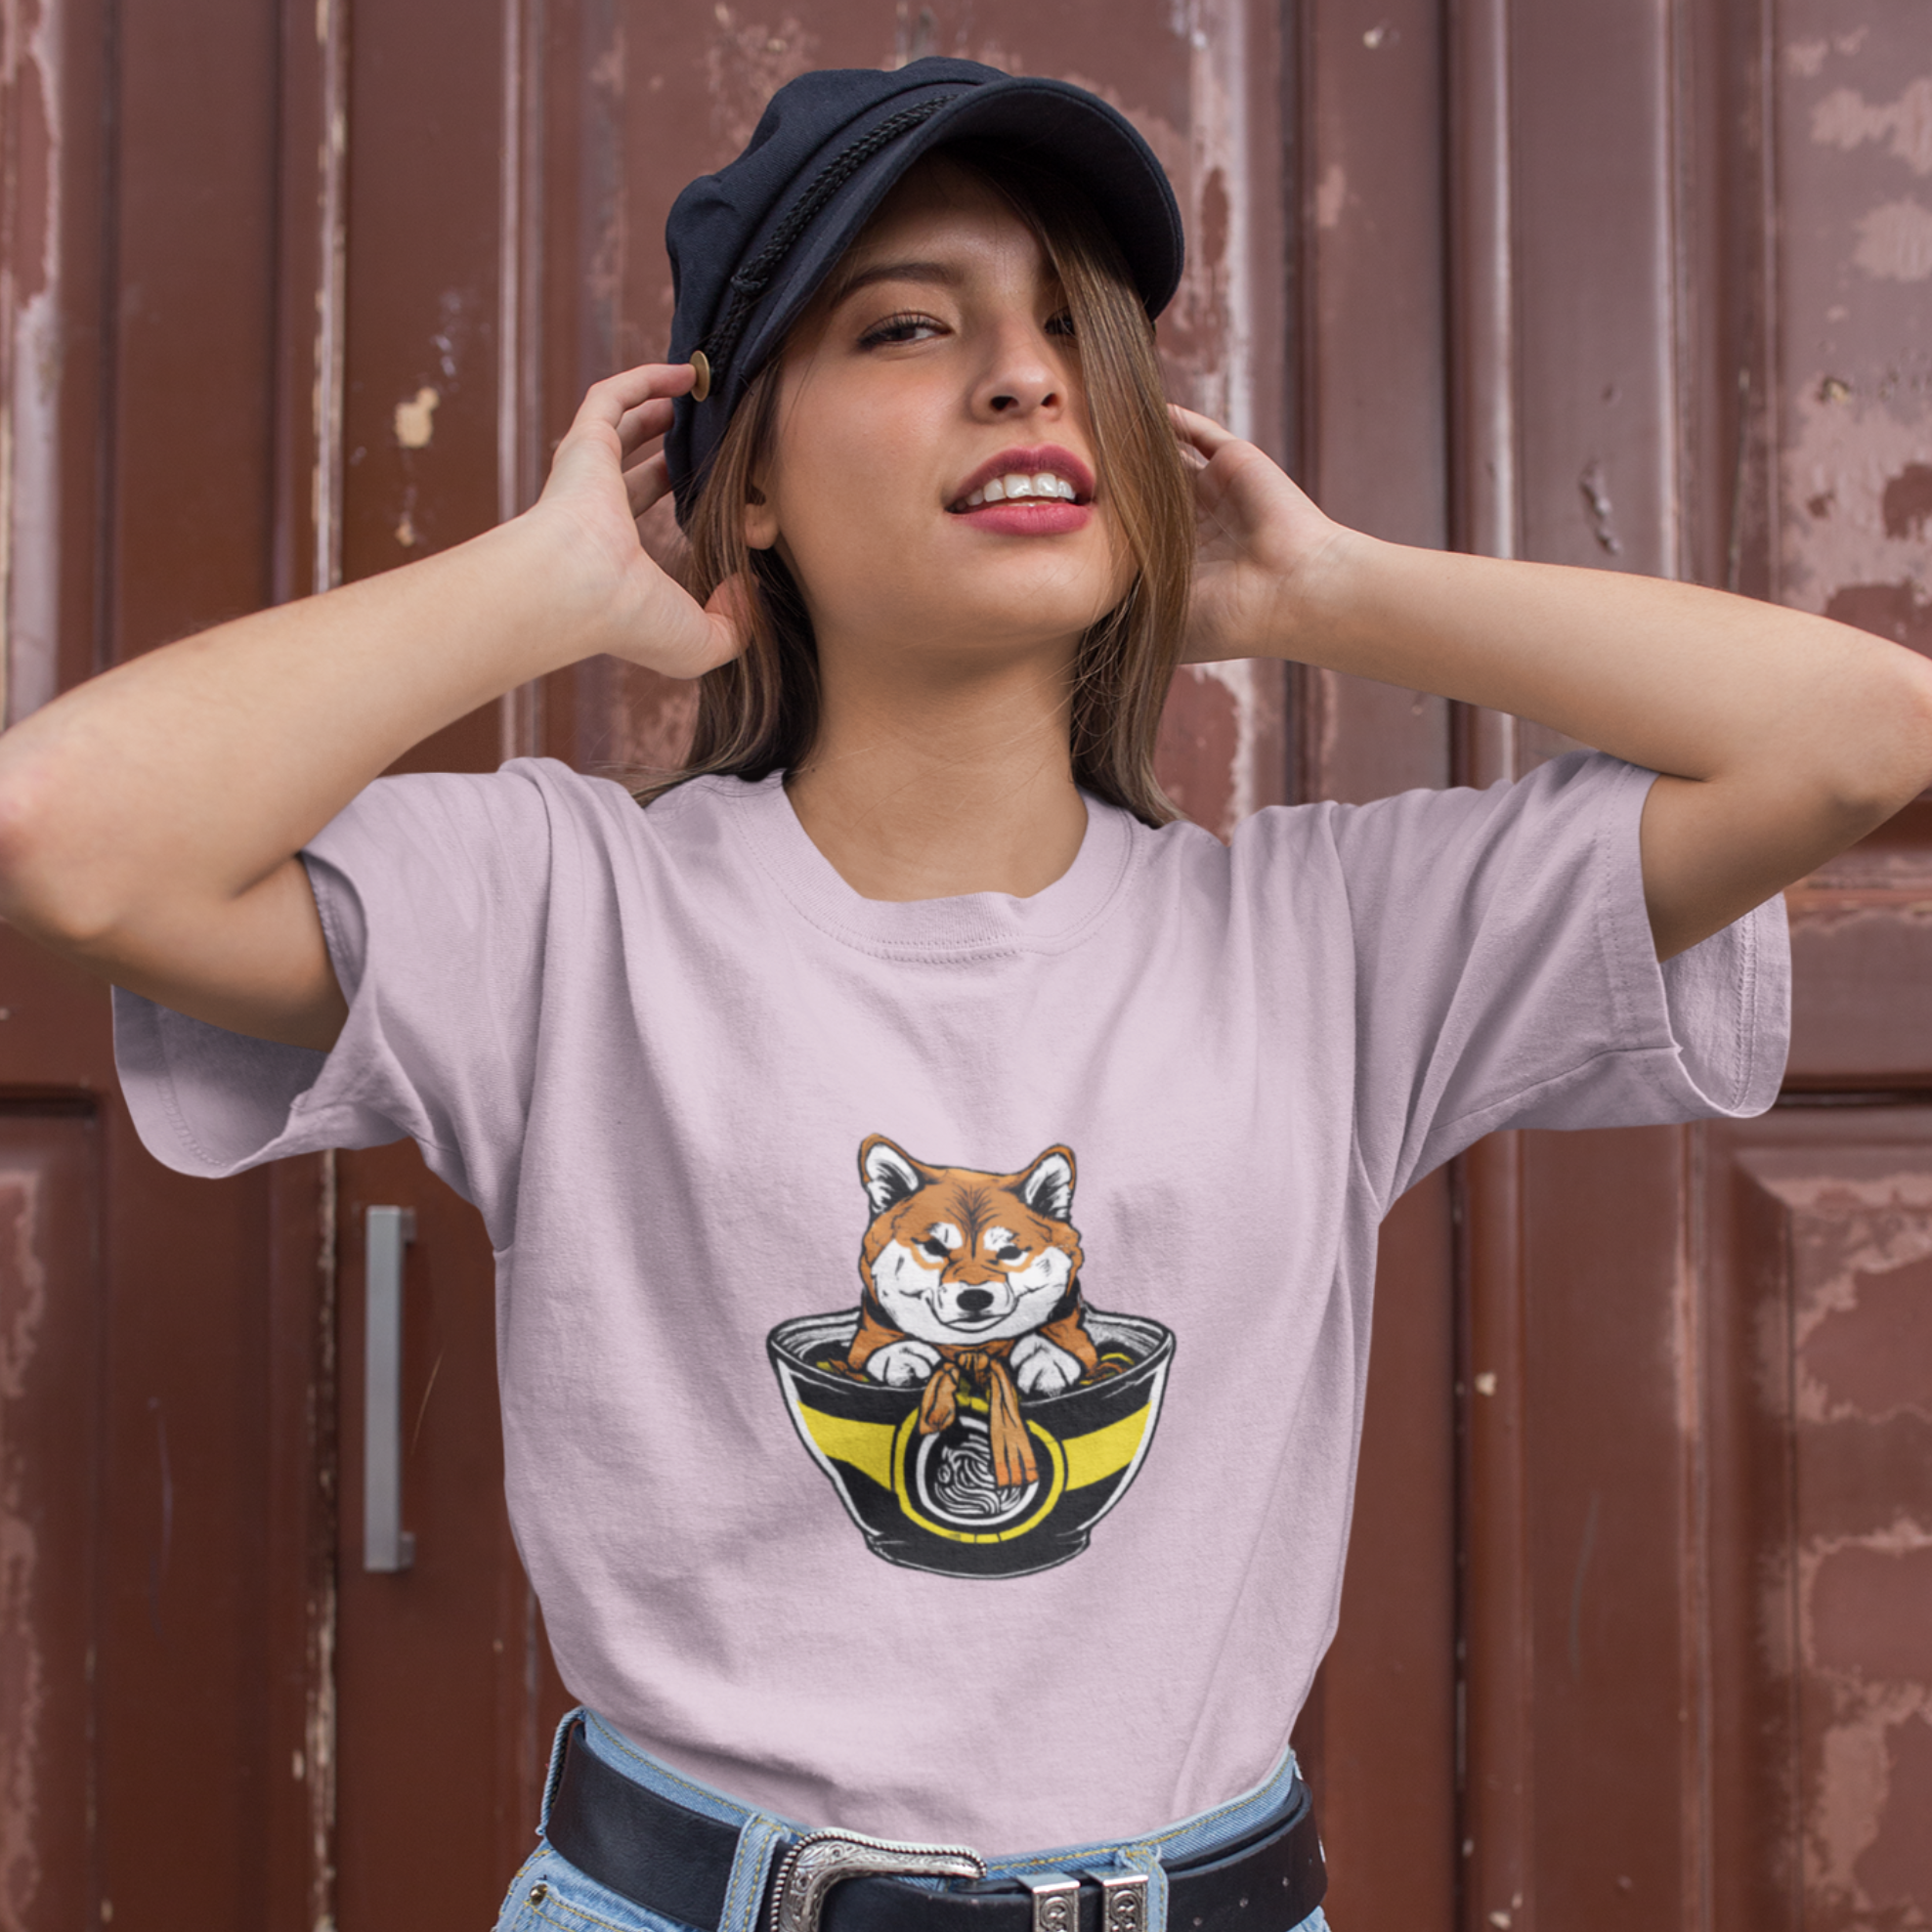 Ramen T-Shirt with Shiba Inu Protector: Japanese Foodie Shirt for Ramen Lovers with Ramen Art